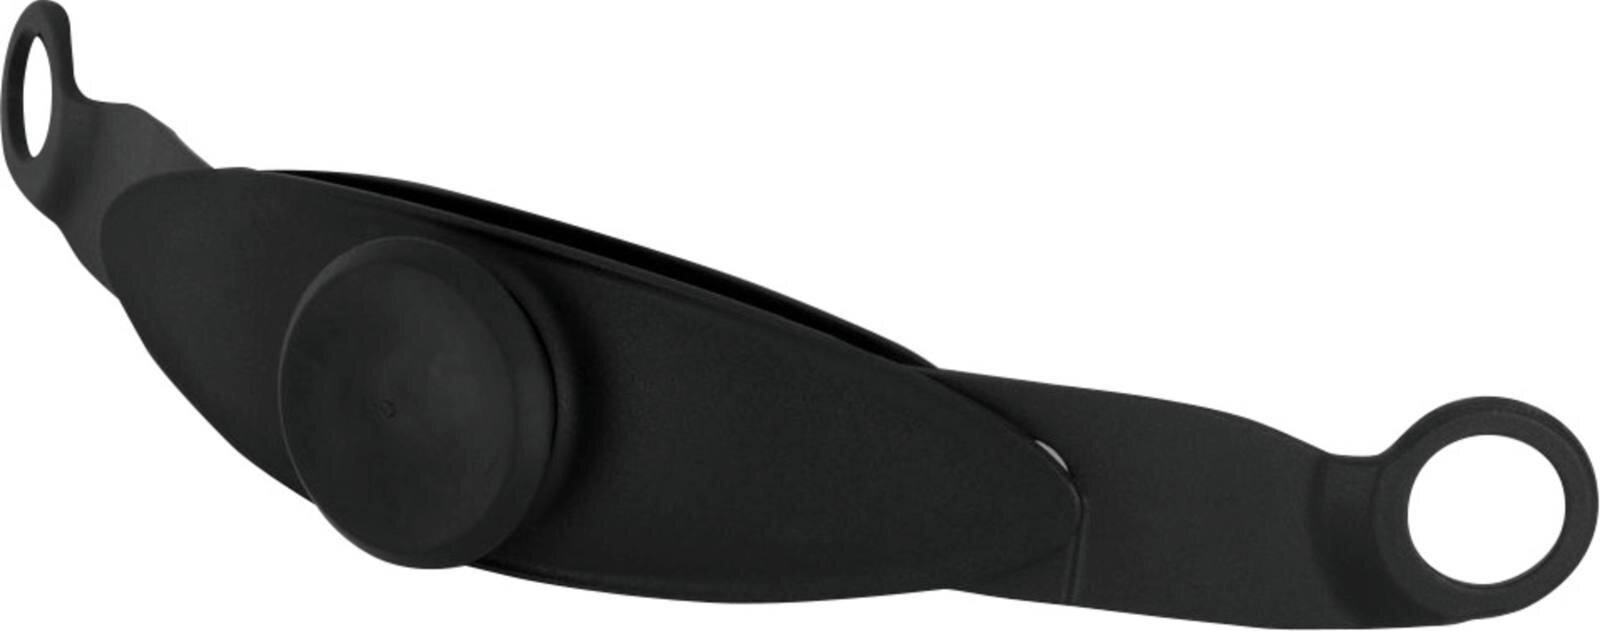 3M Speedglas adjustment strap / ratchet system for headgear #536200